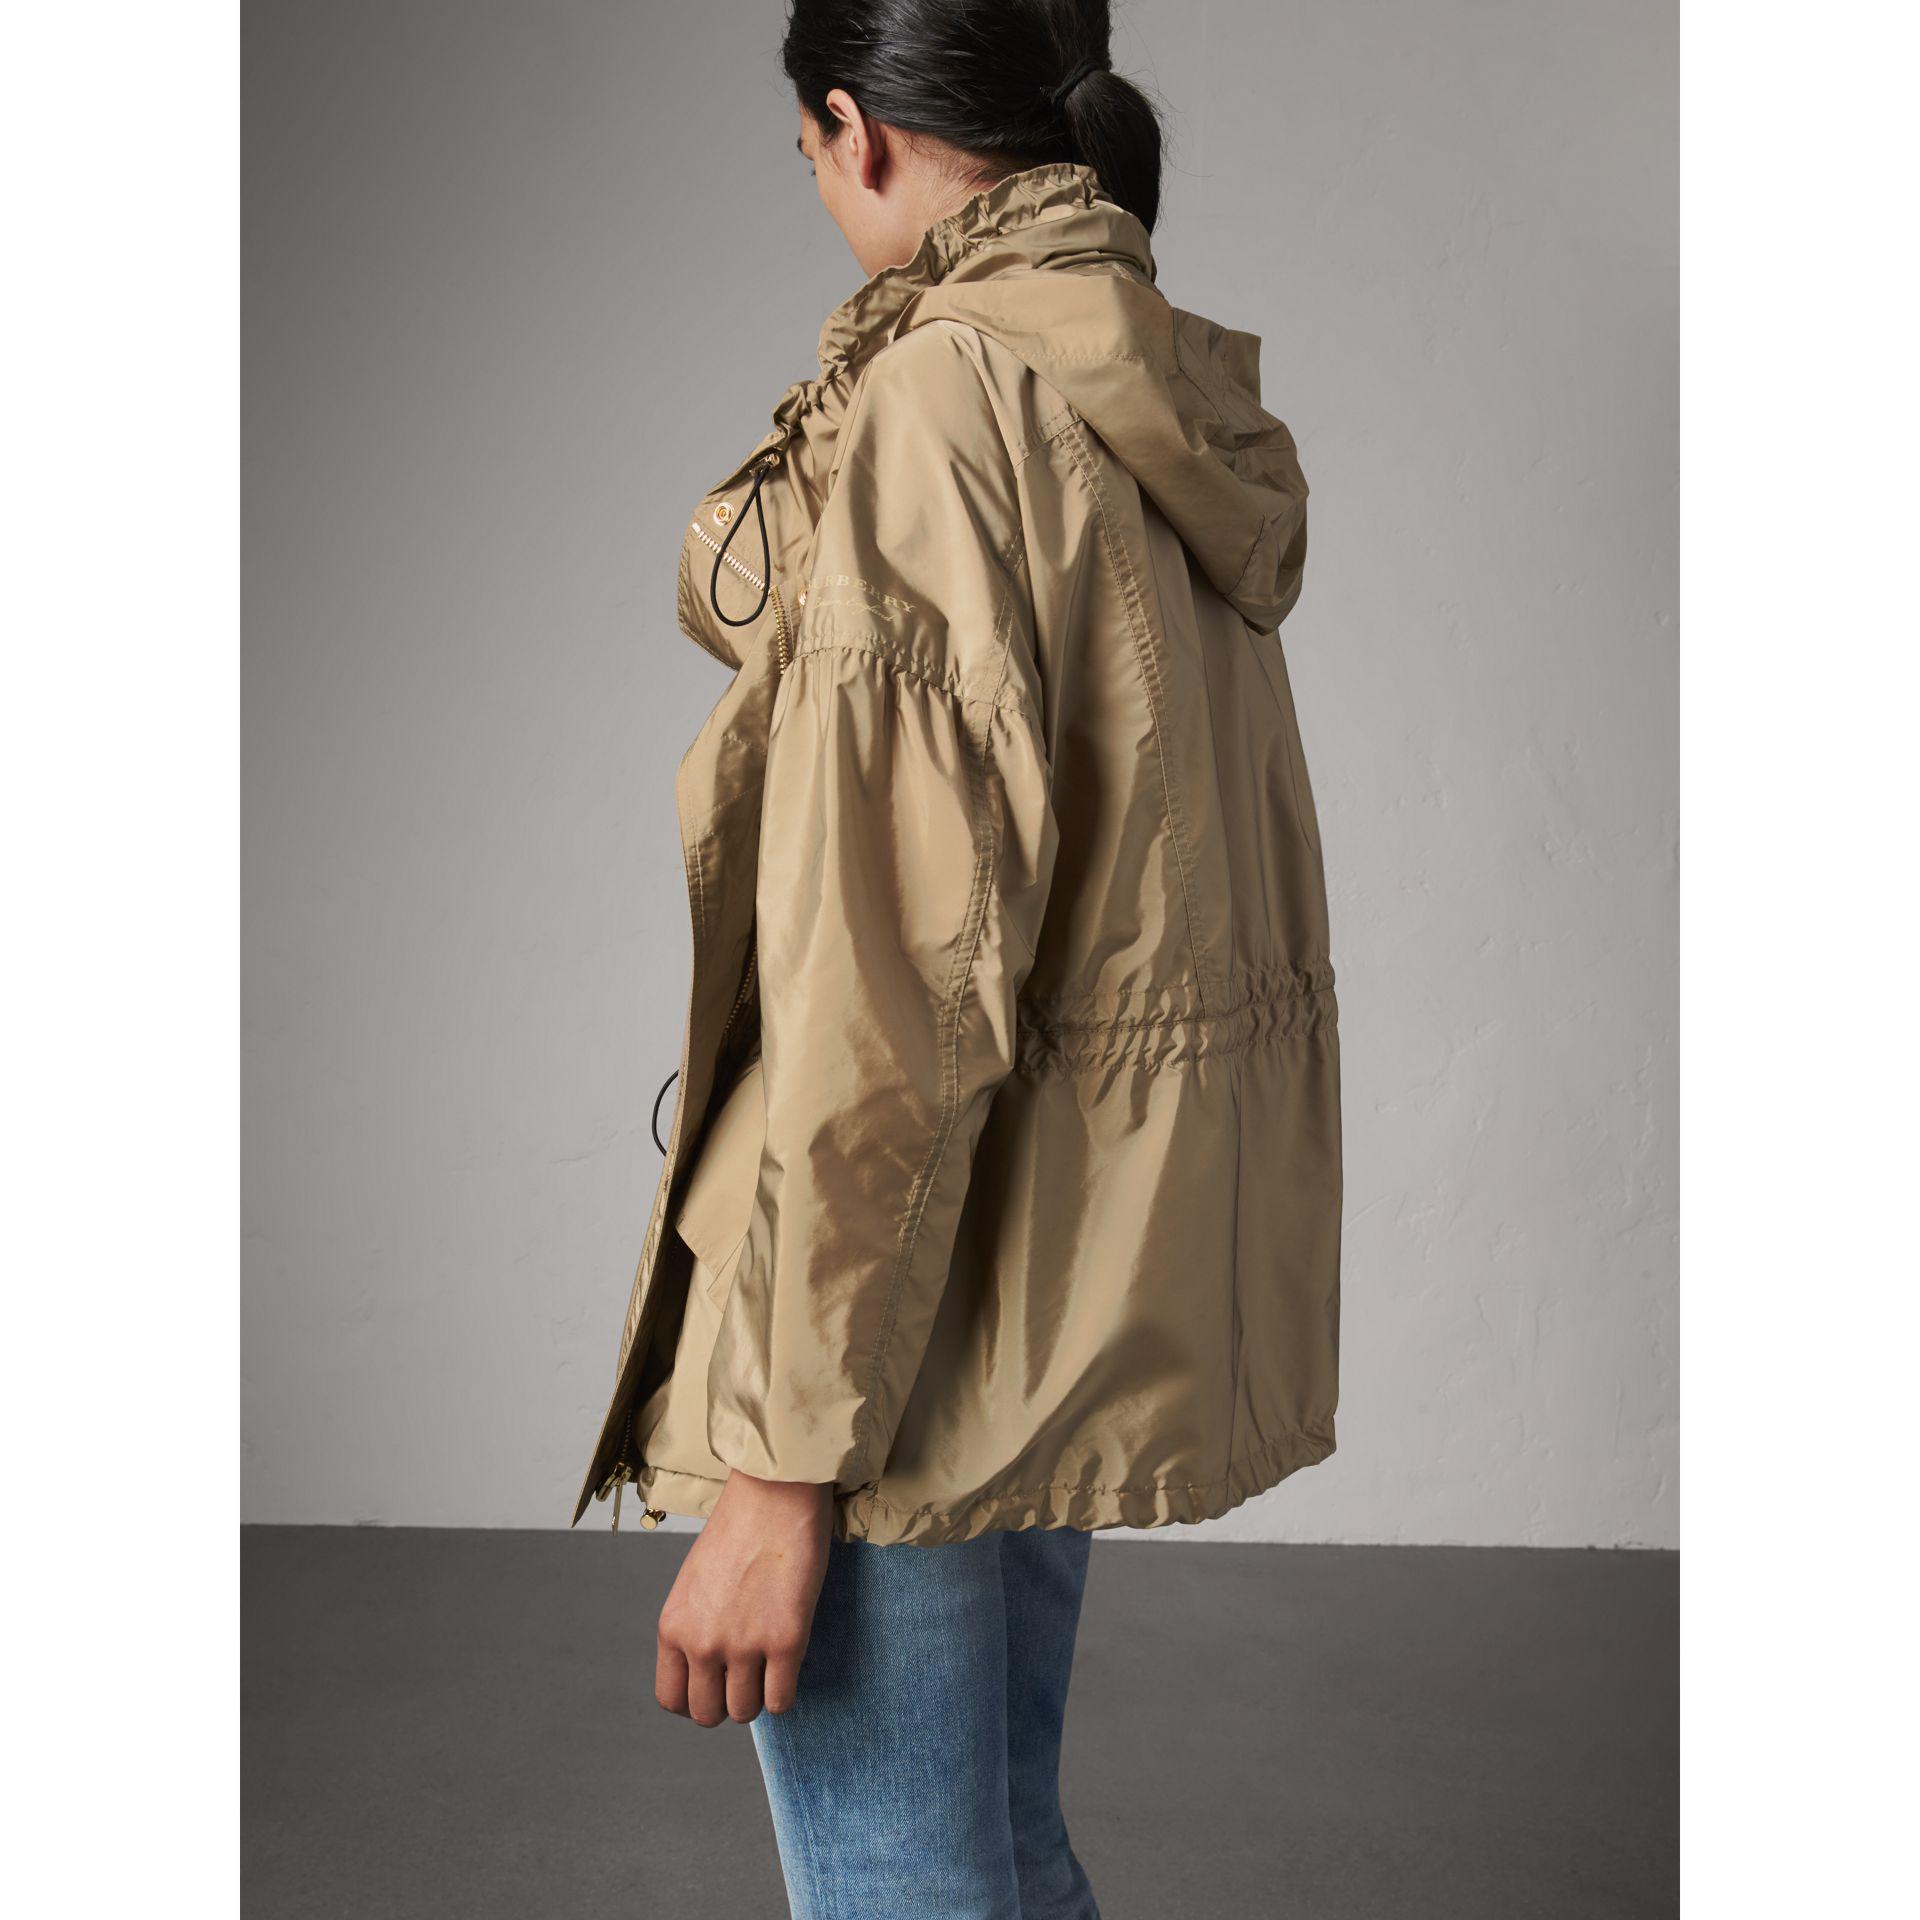 burberry rain jacket with hood